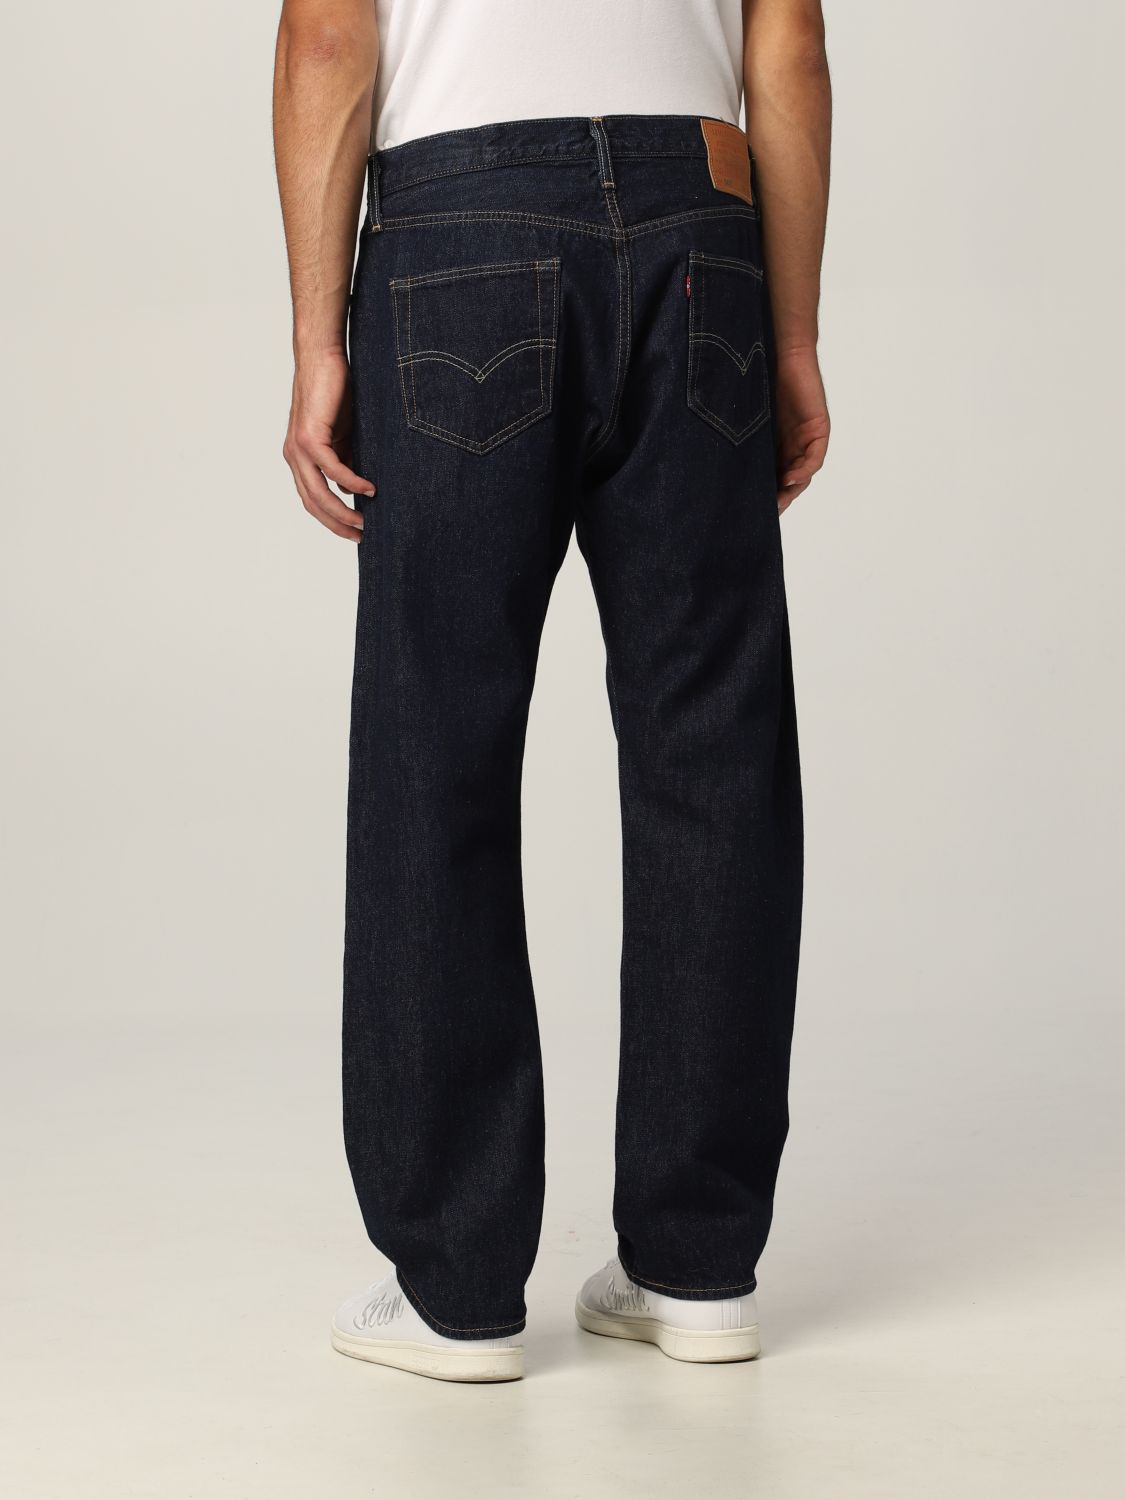 Jeans para hombre, Denim | Levi's en línea en GIGLIO.COM